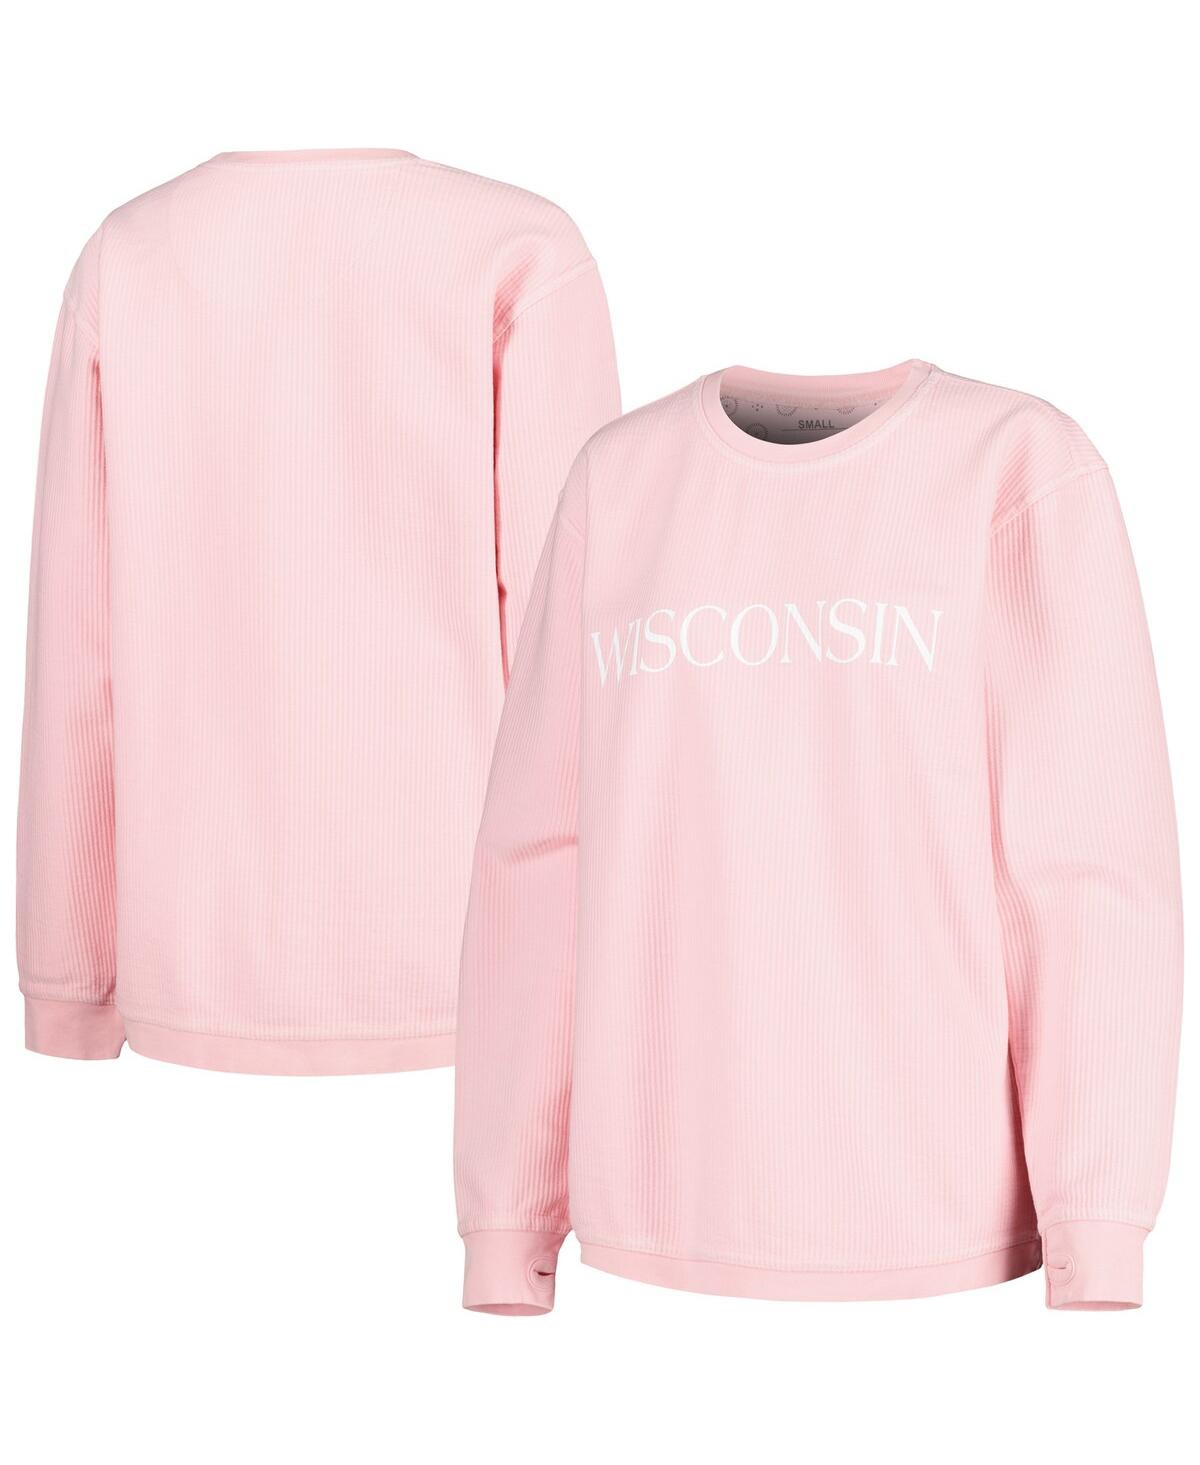 Shop Pressbox Women's  Pink Wisconsin Badgers Comfy Cord Bar Print Pullover Sweatshirt